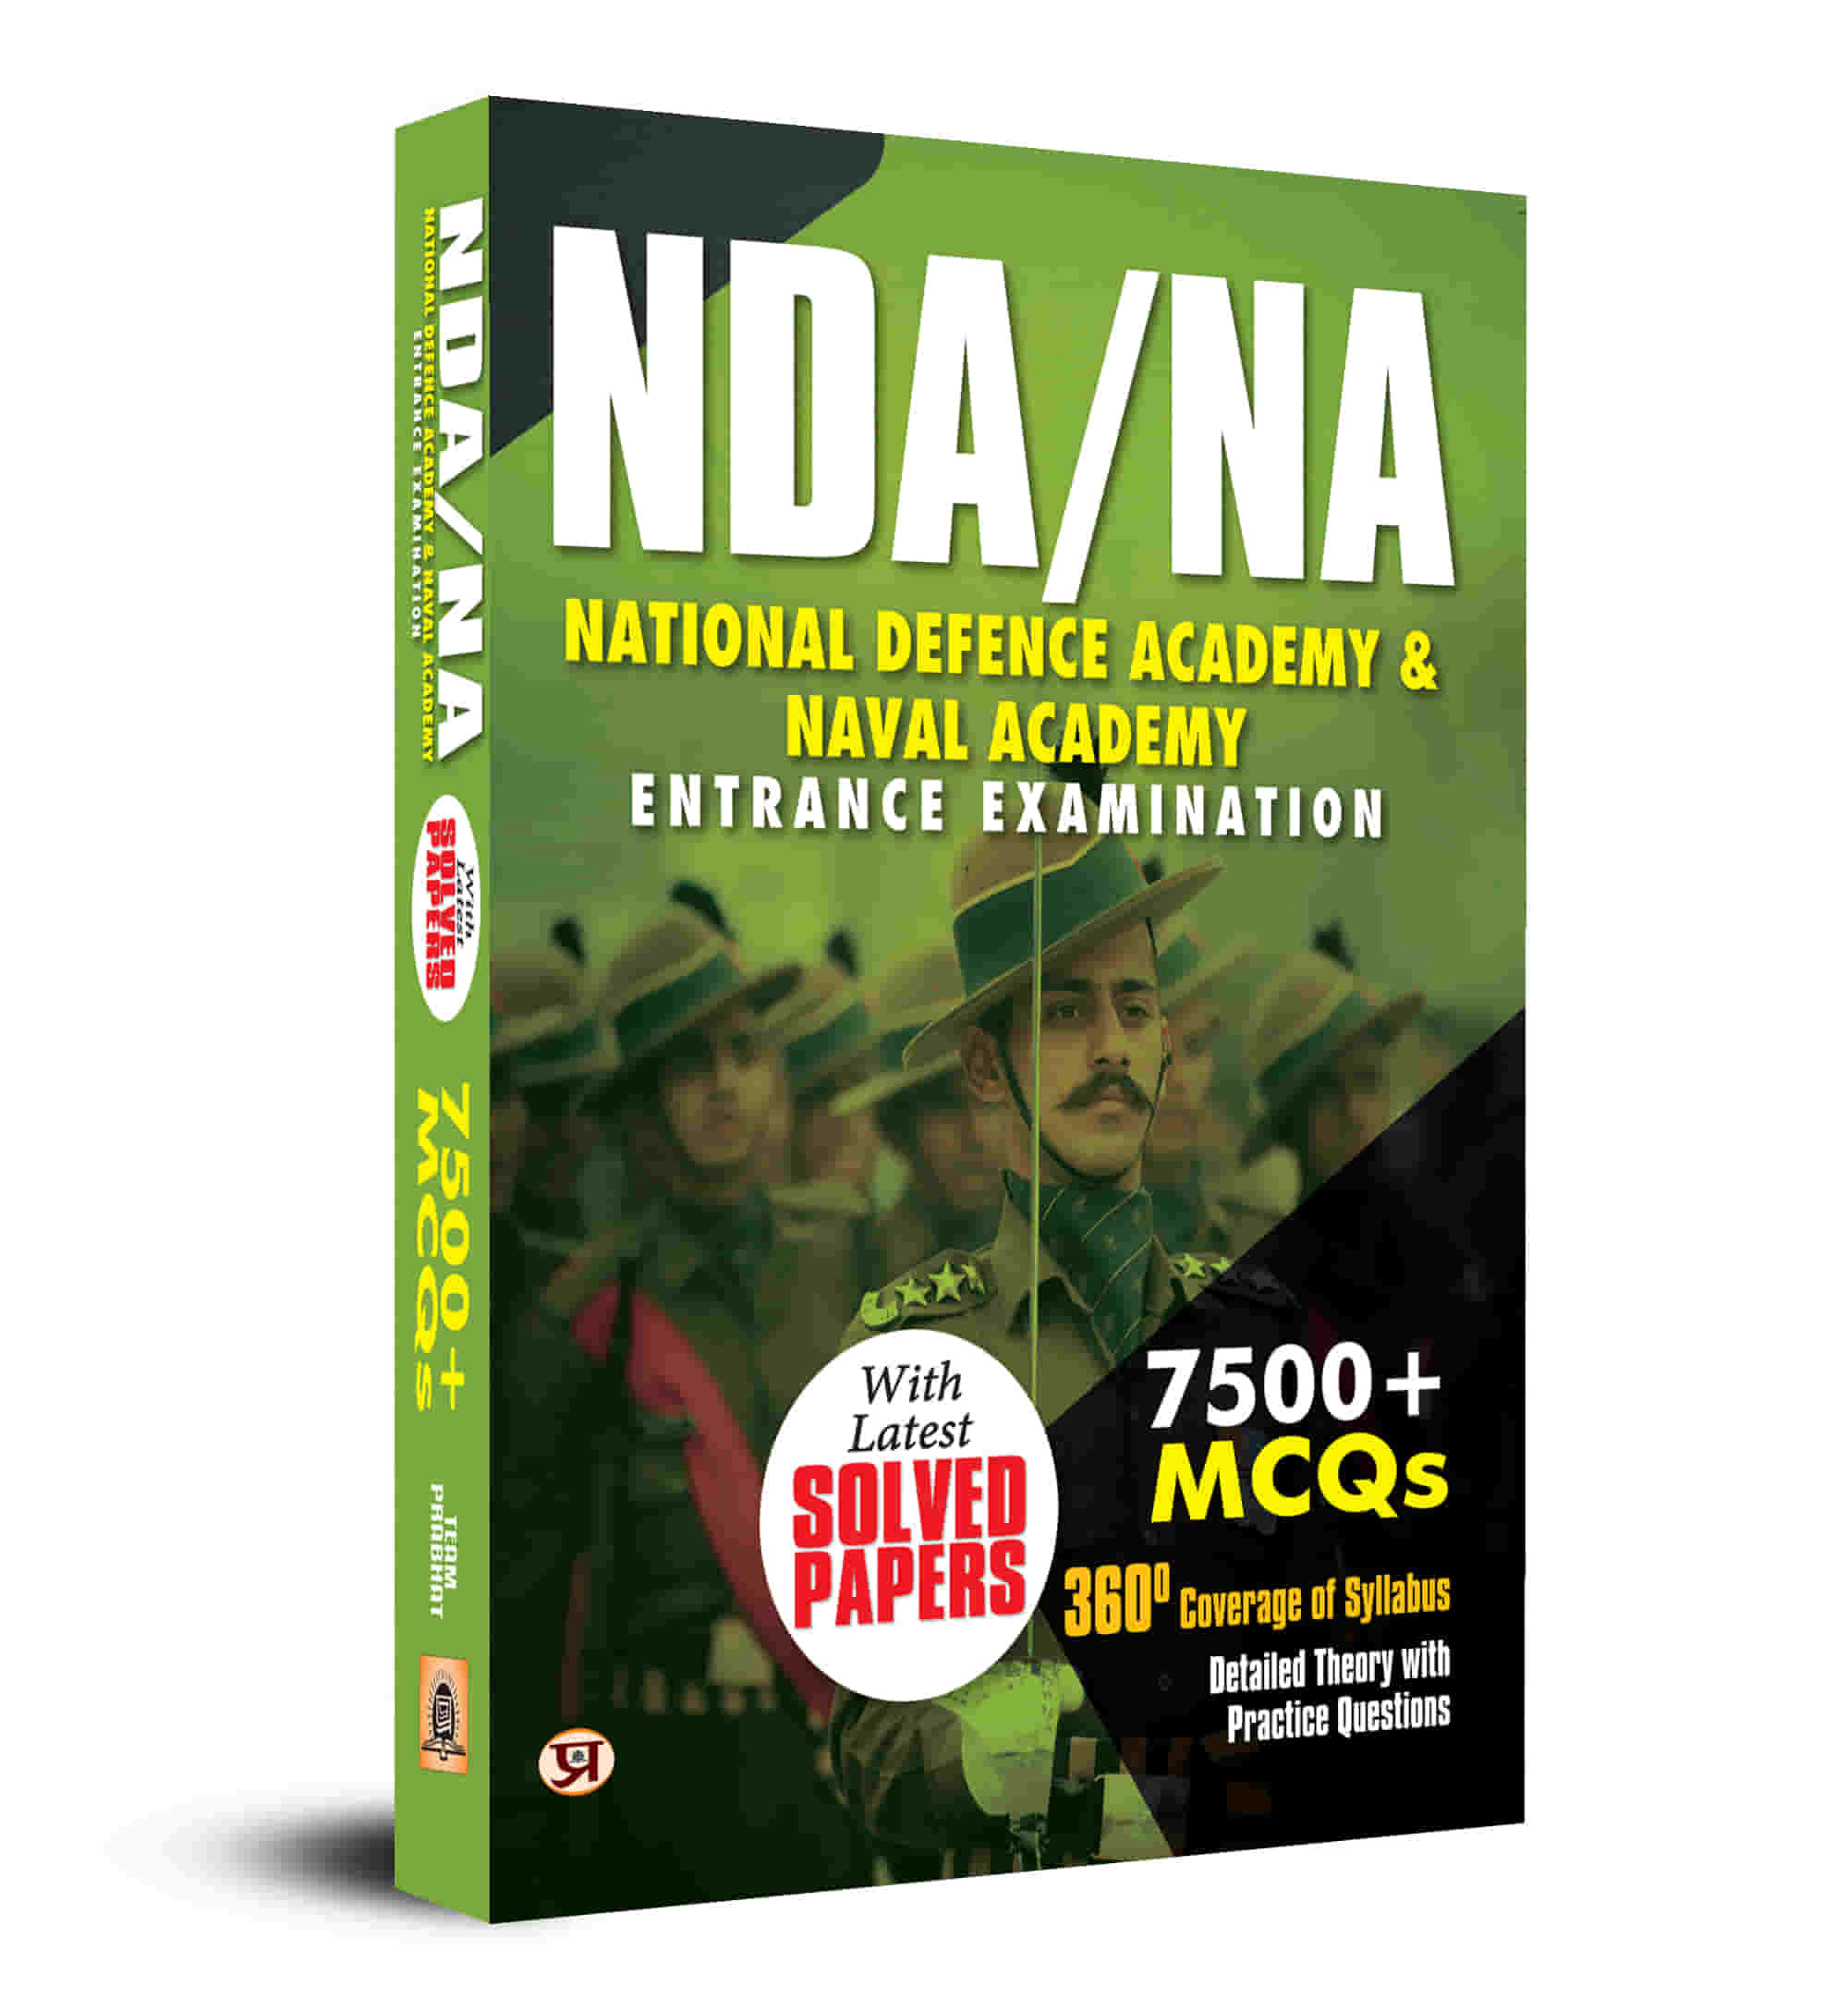 NDA/NA National Defence Academy & Naval Academy Entrance Examination Guide